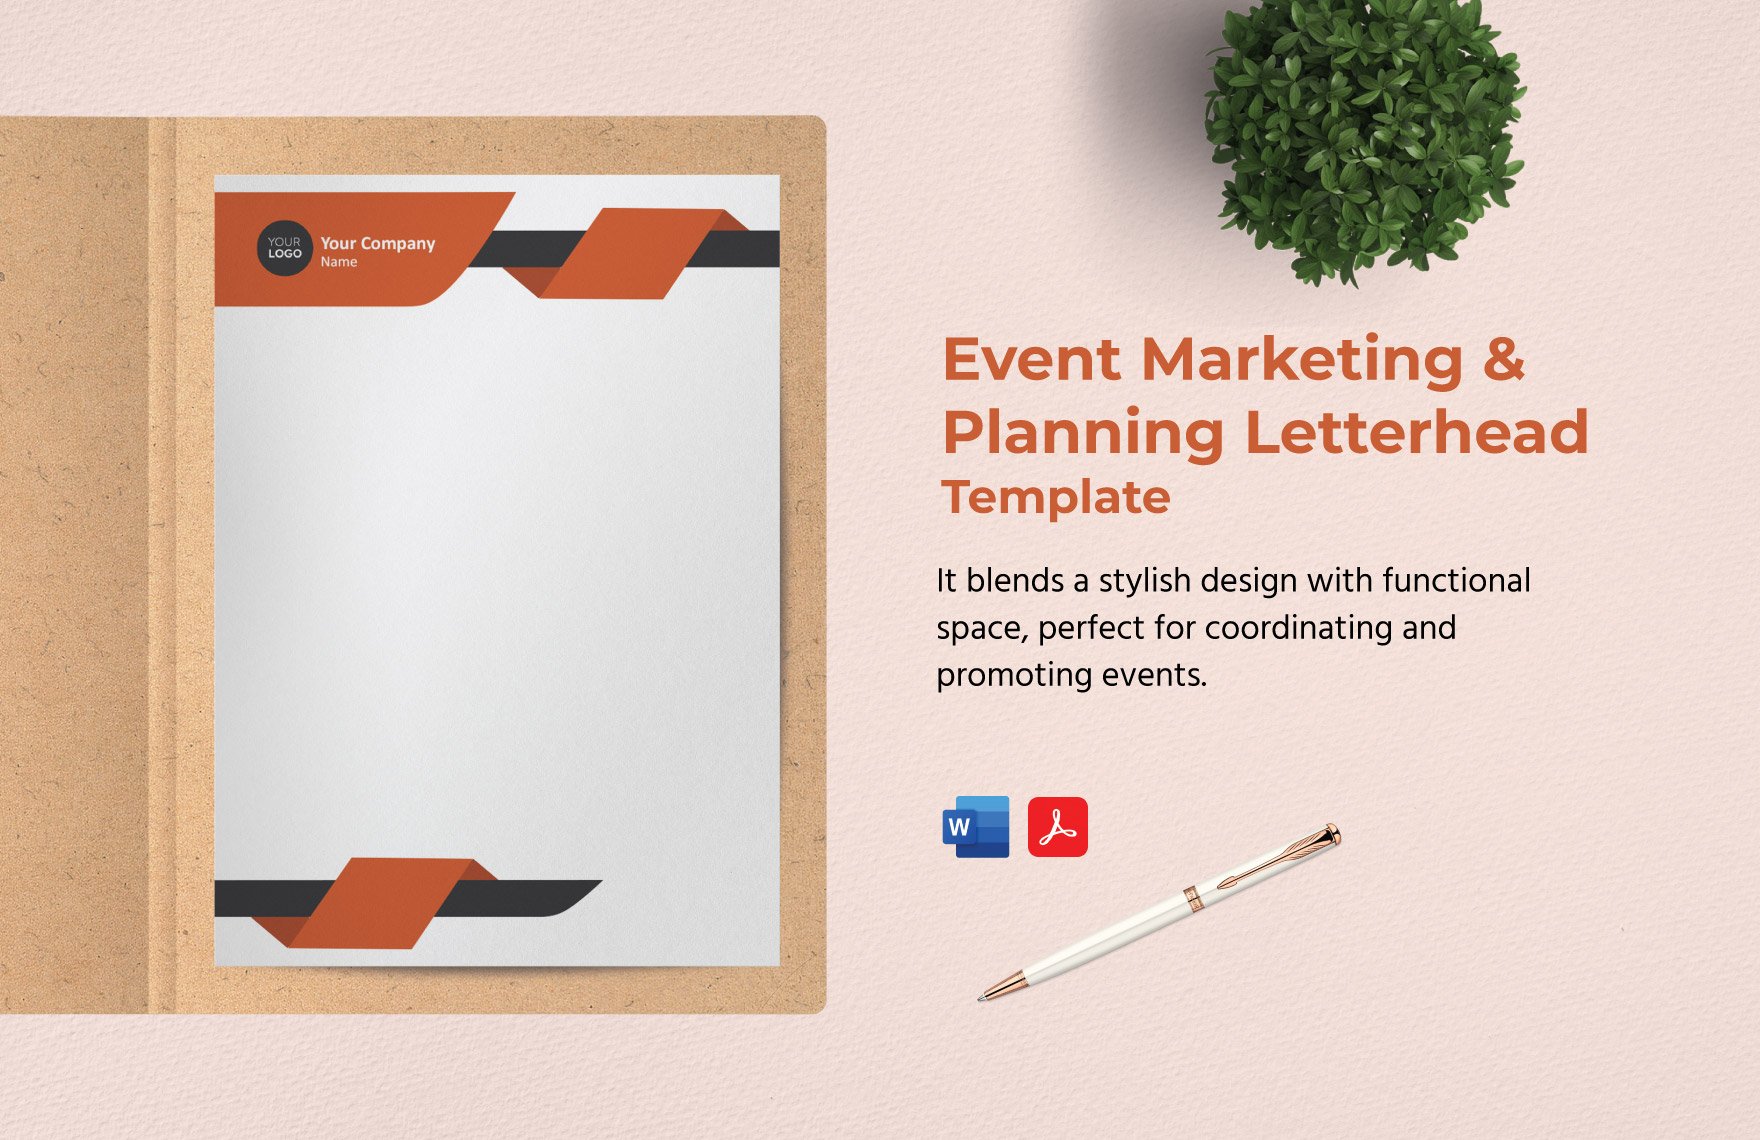 Event Marketing & Planning Letterhead Template